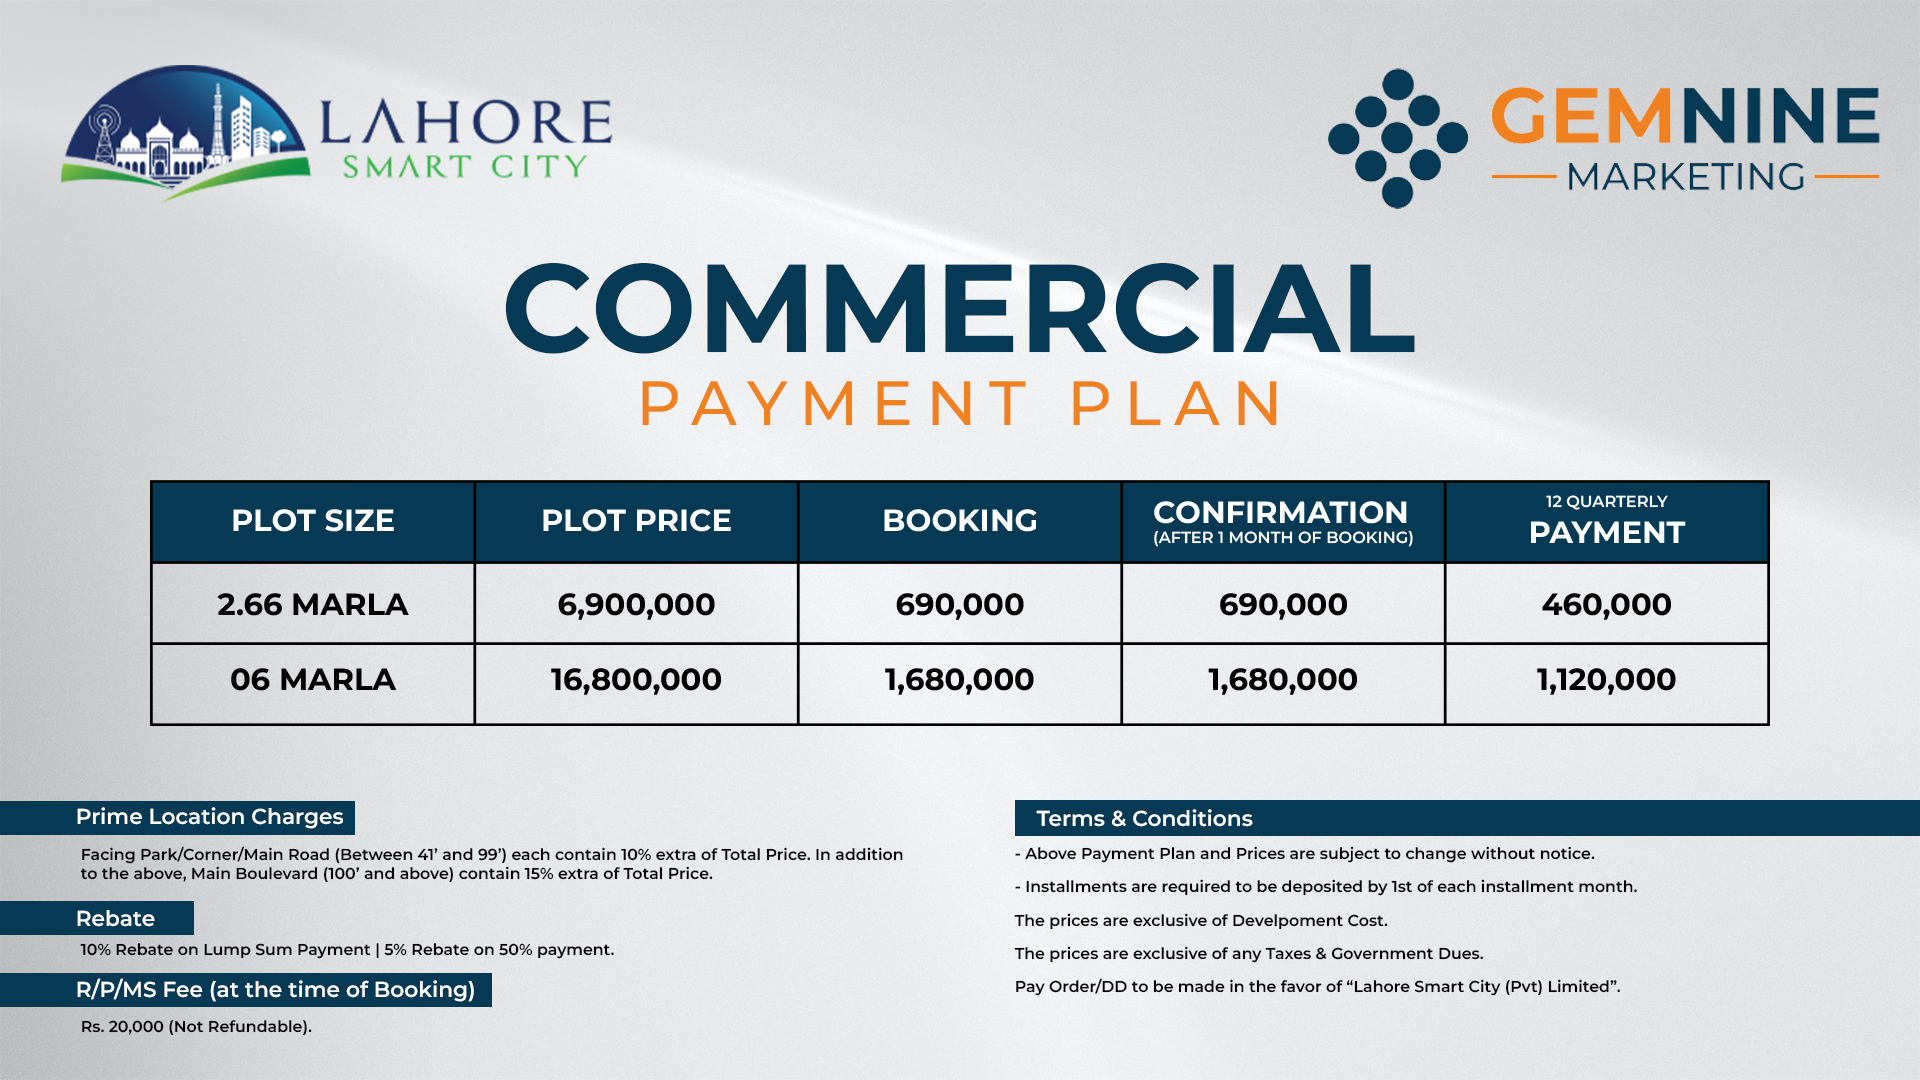 Lahore Smart City Commercial Payment Plan